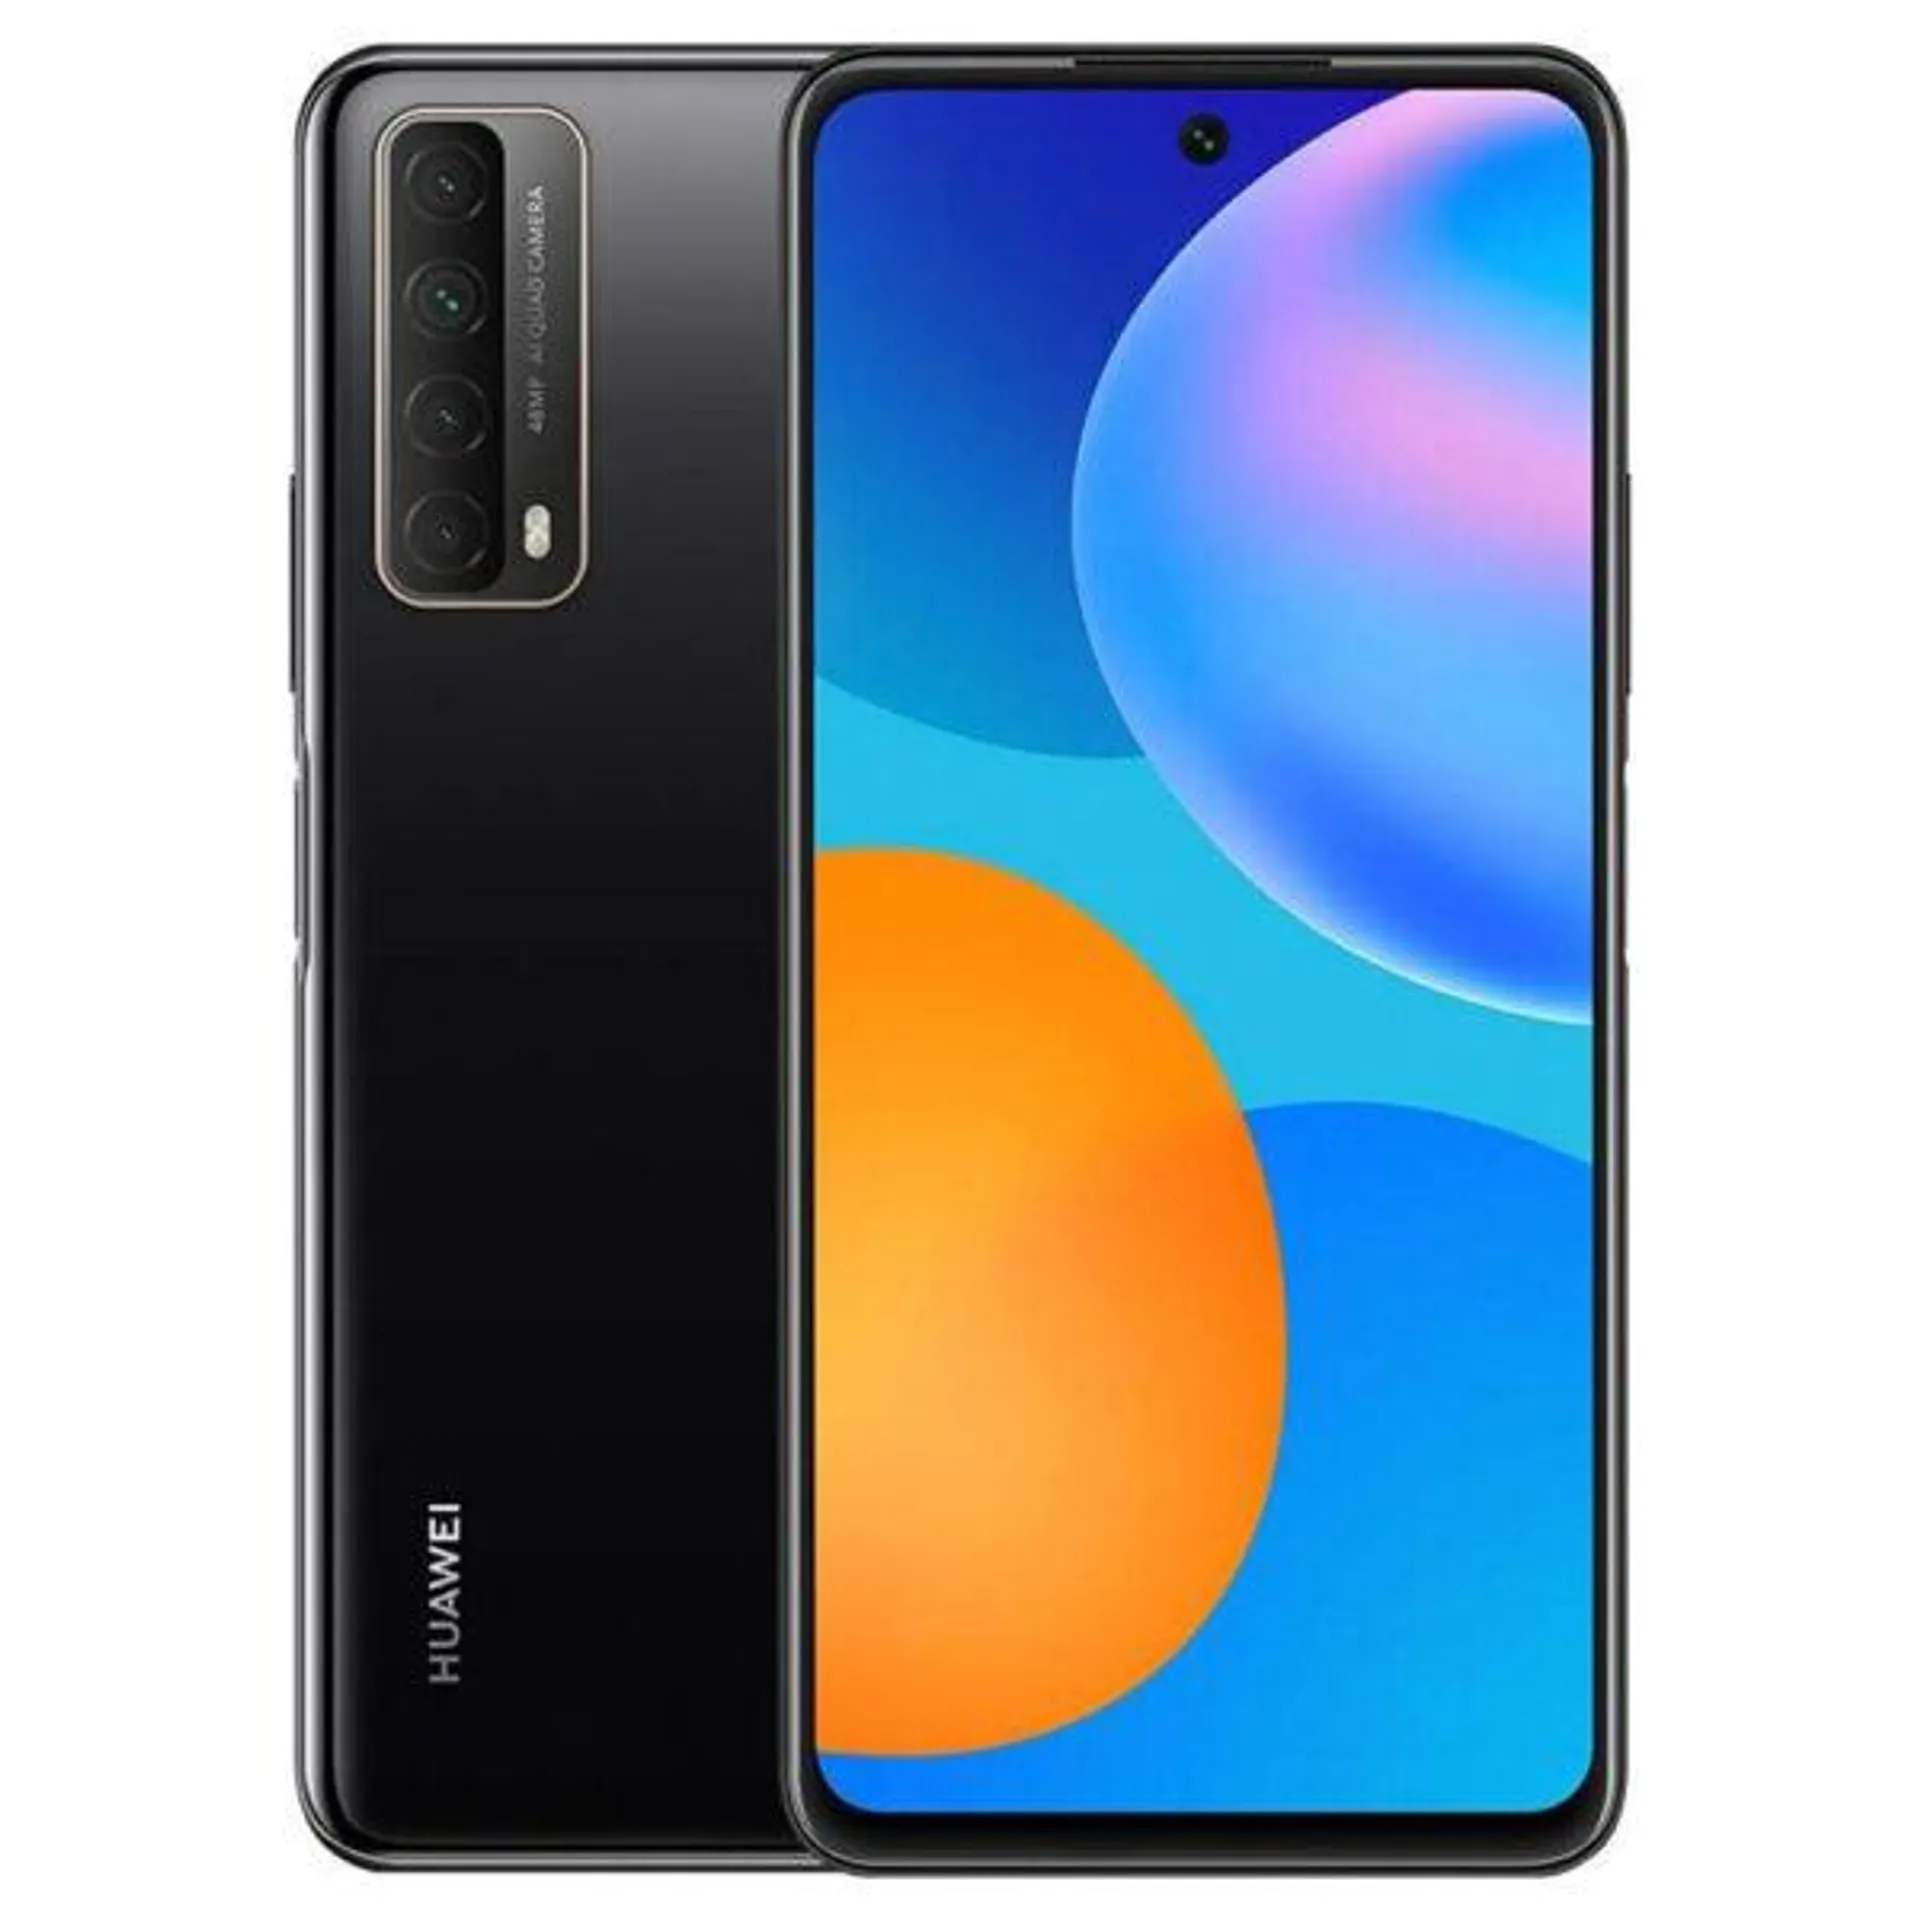 Huawei P Smart (2021) Dual-SIM midnight black – Schachtel geöffnet